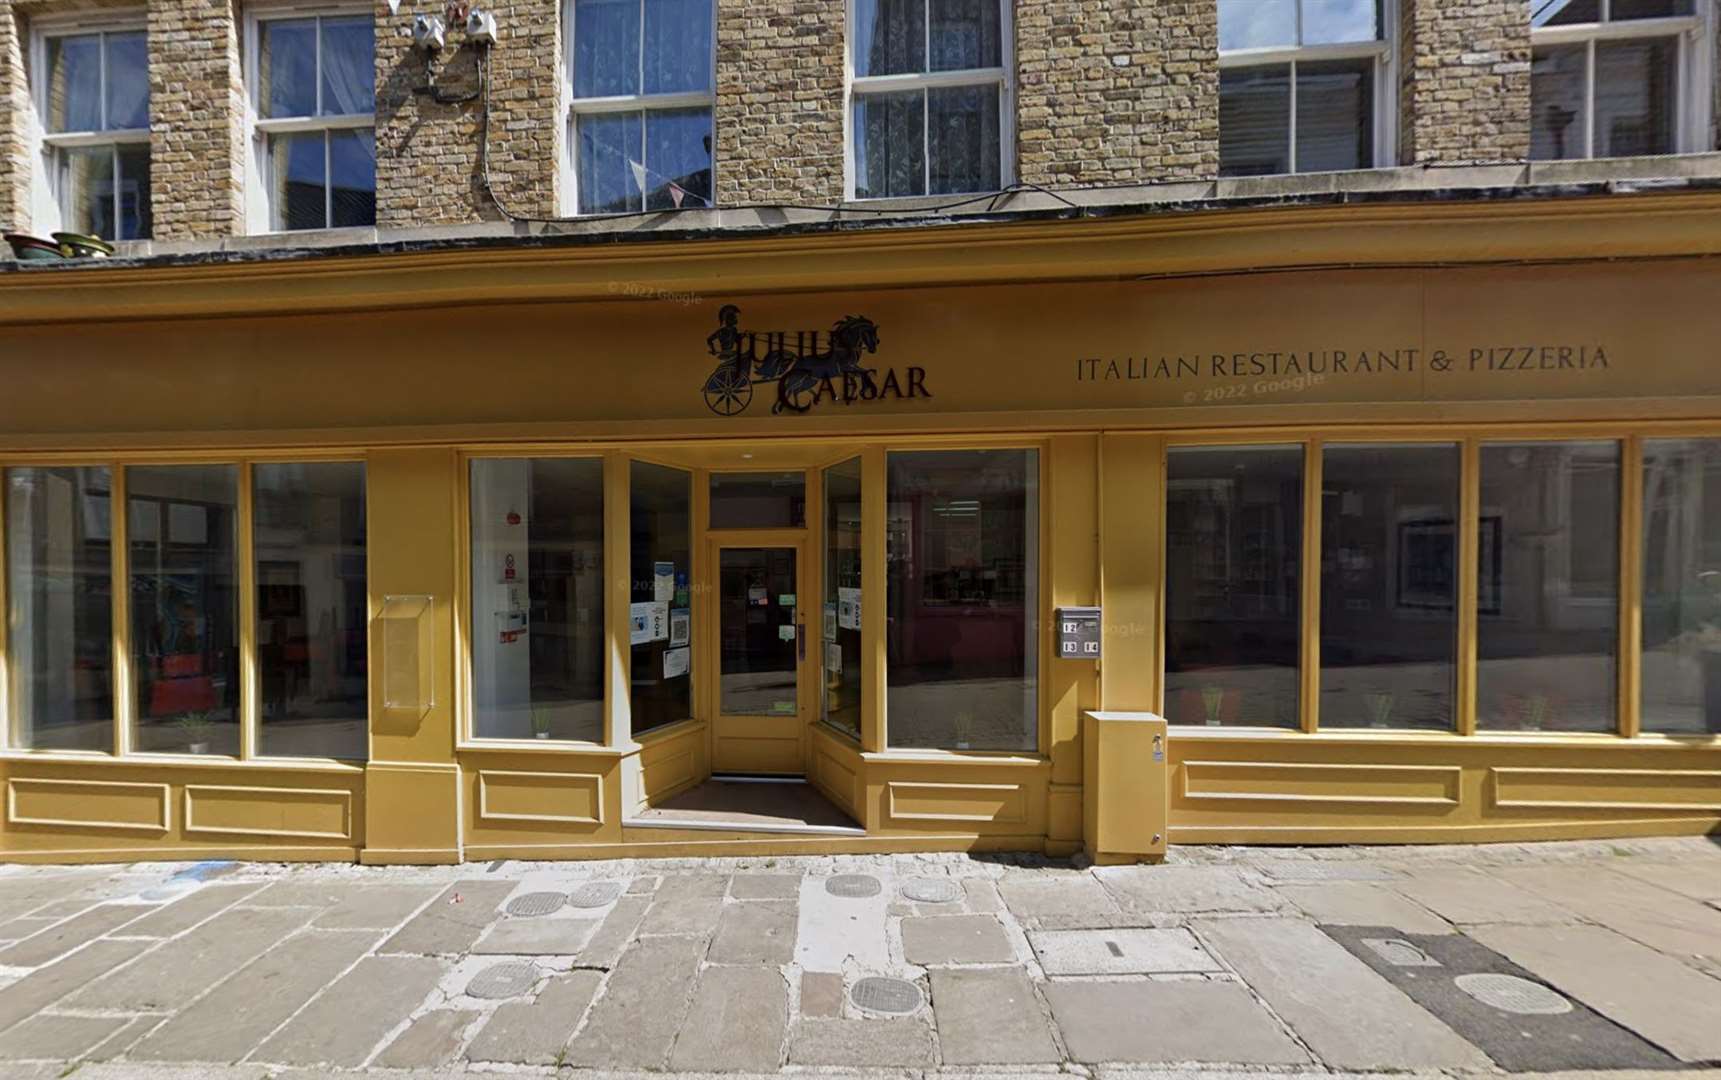 Julius Caesar Italian Restaurant and Pizzeria on Gravesend High Street. Picture; Google Maps